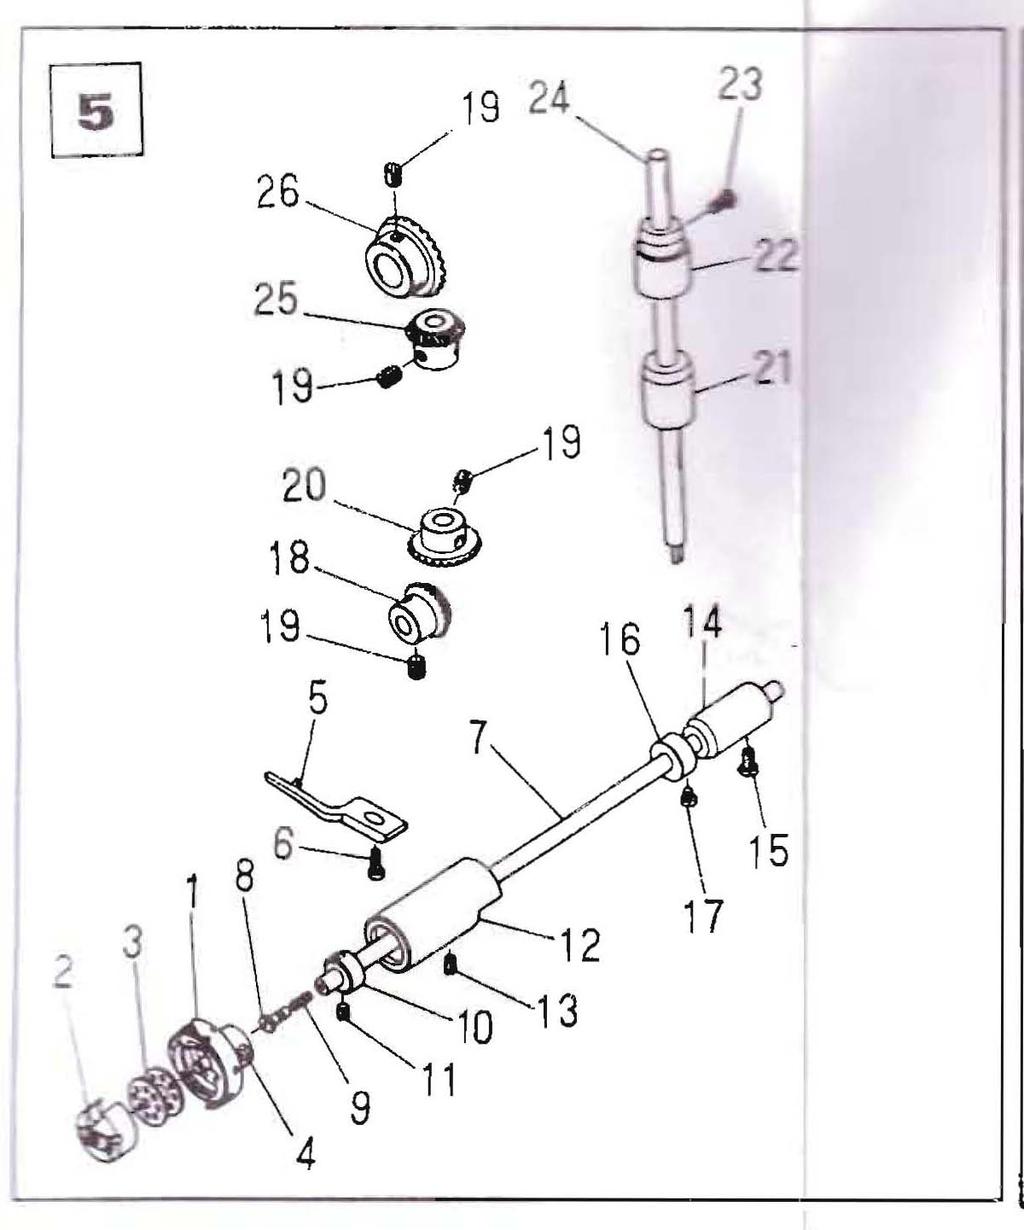 5. Hook Driving Shaft Components 1 H110-05-001 Hook Asm. 1 2 H110-05-002 Bobbin Case Asm. 1 3 H110-05-003 Bobbin Case Asm.